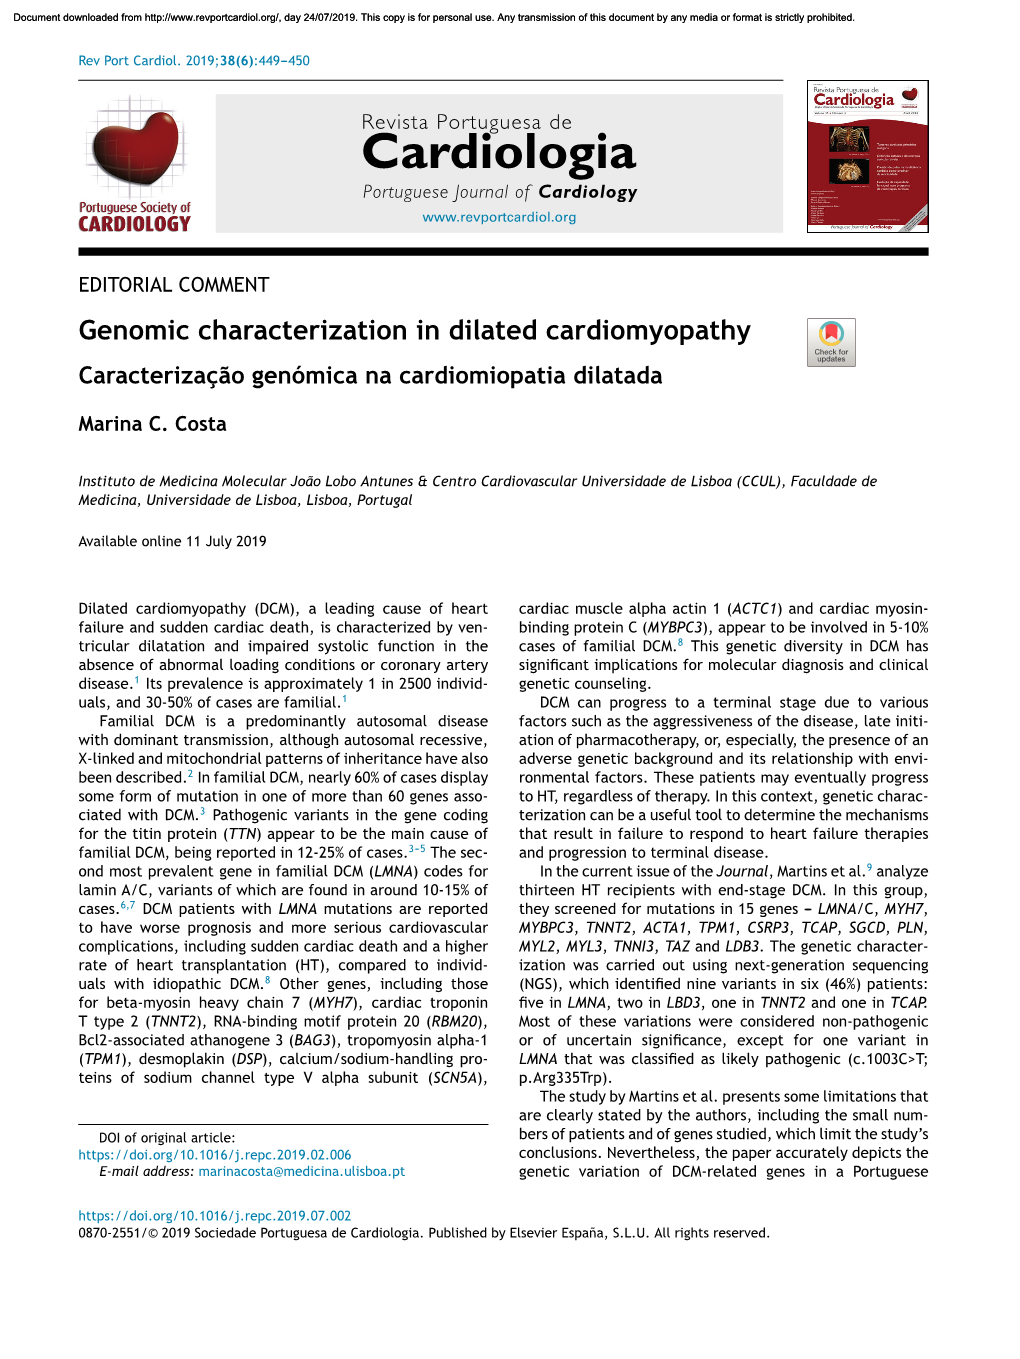 Genomic Characterization in Dilated Cardiomyopathy